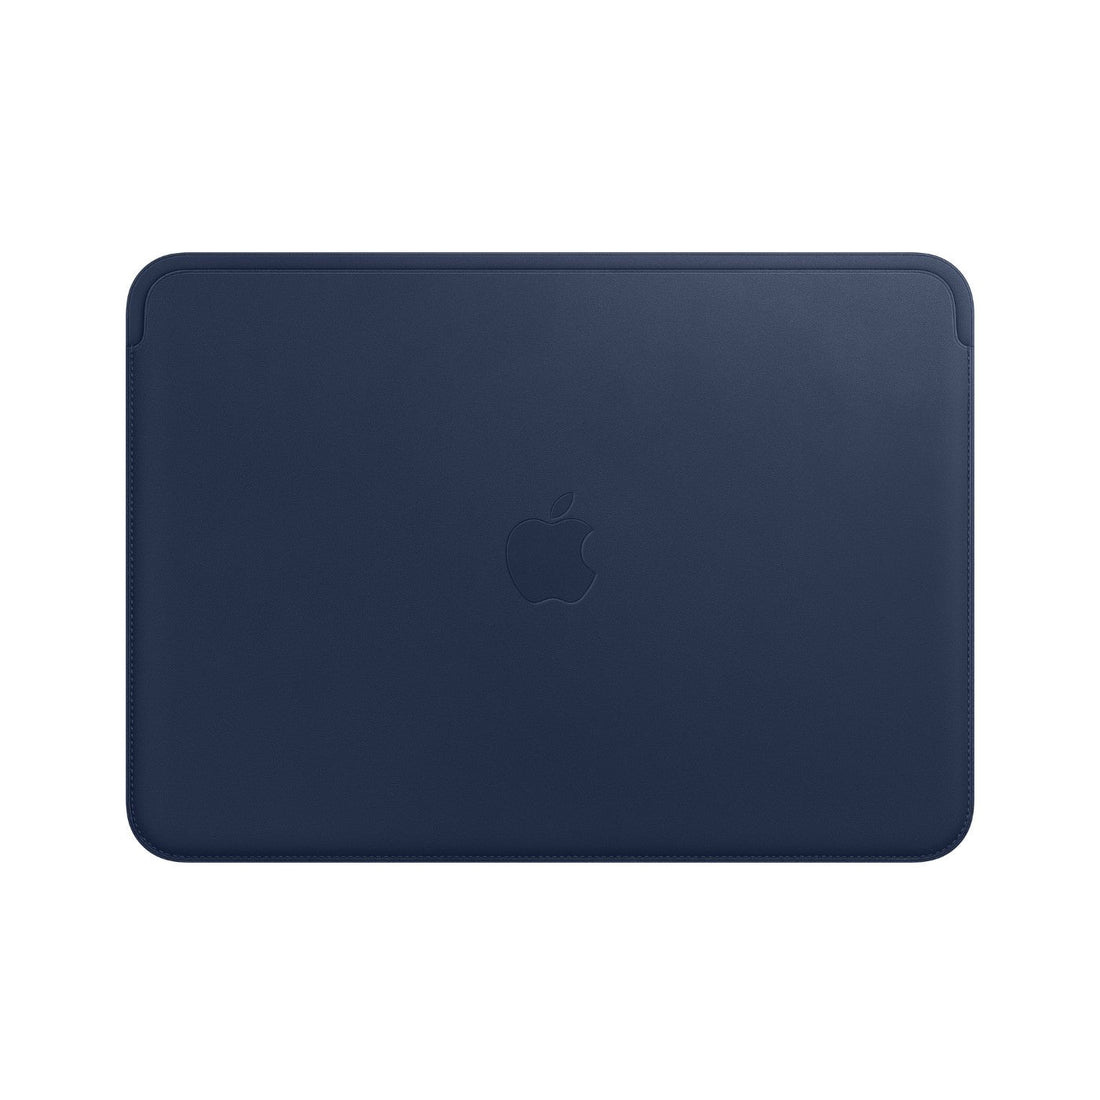 Husa Piele Naturala Apple MacBook Pro 13 Midnight Blue - MRQL2ZM/A Originala Resigilat - 190198734846 - 1